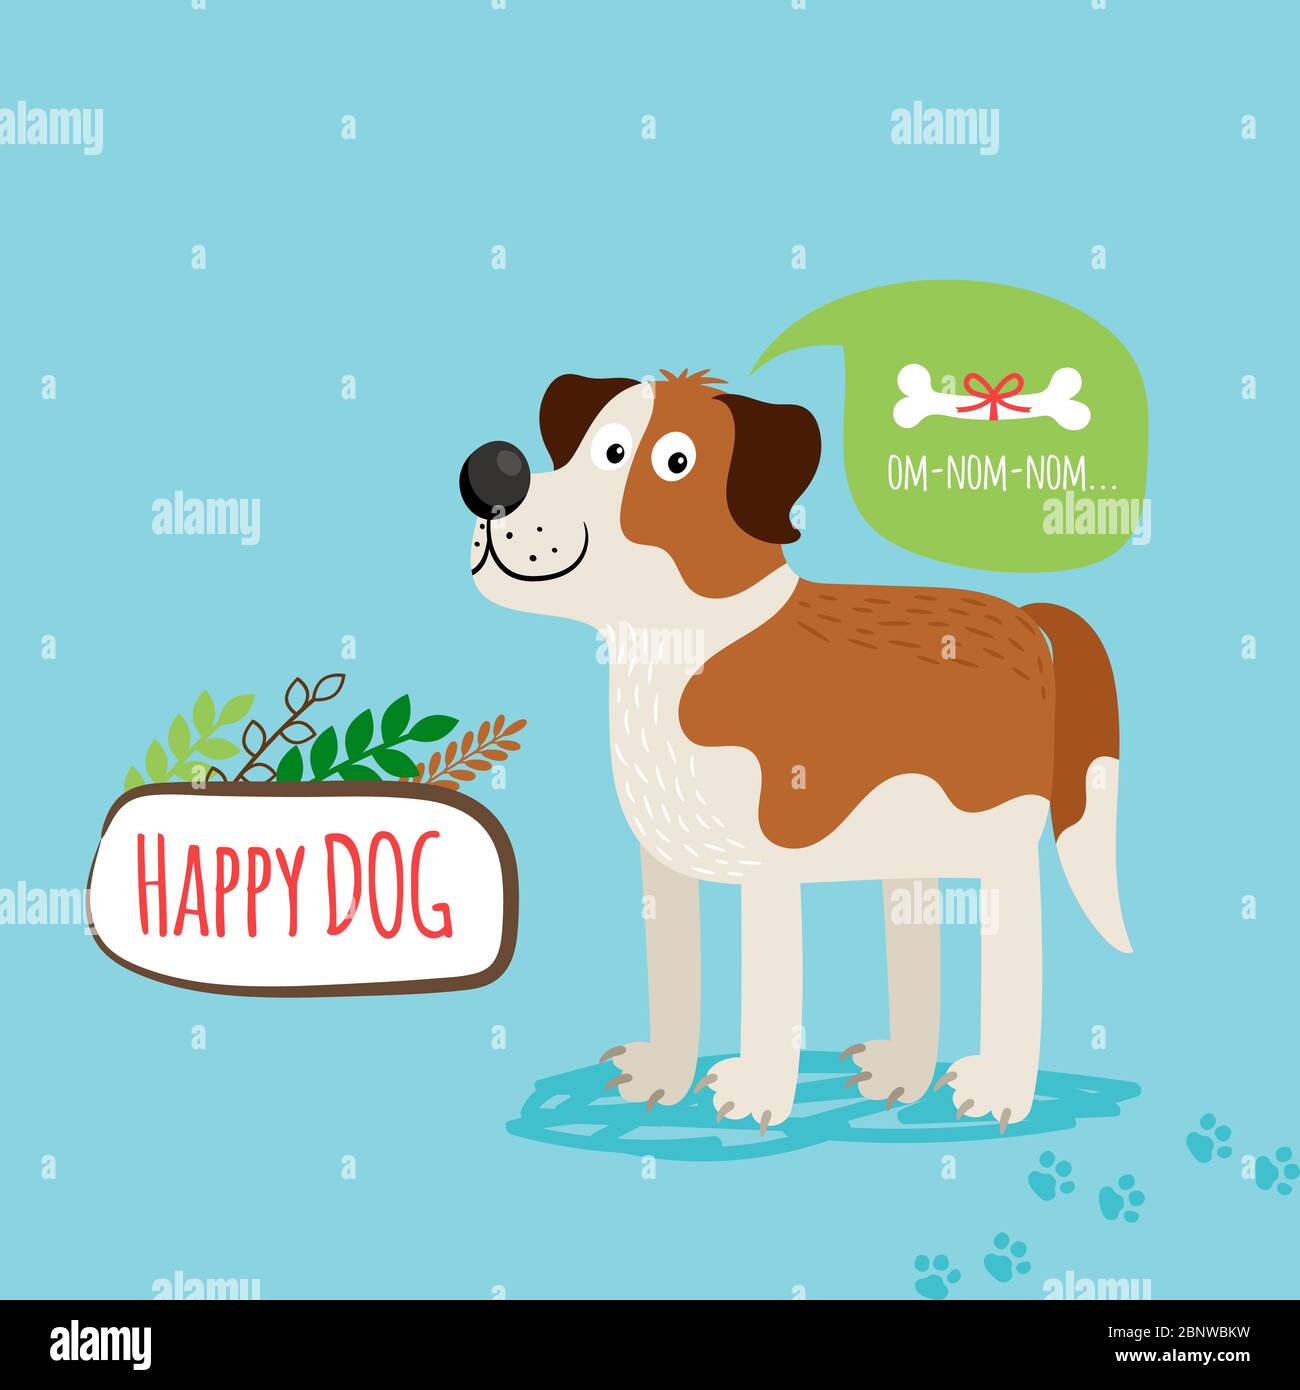 Vector Cartoon Happy Dog Card Template With Text Om Nom Nom Stock Vector Image Art Alamy